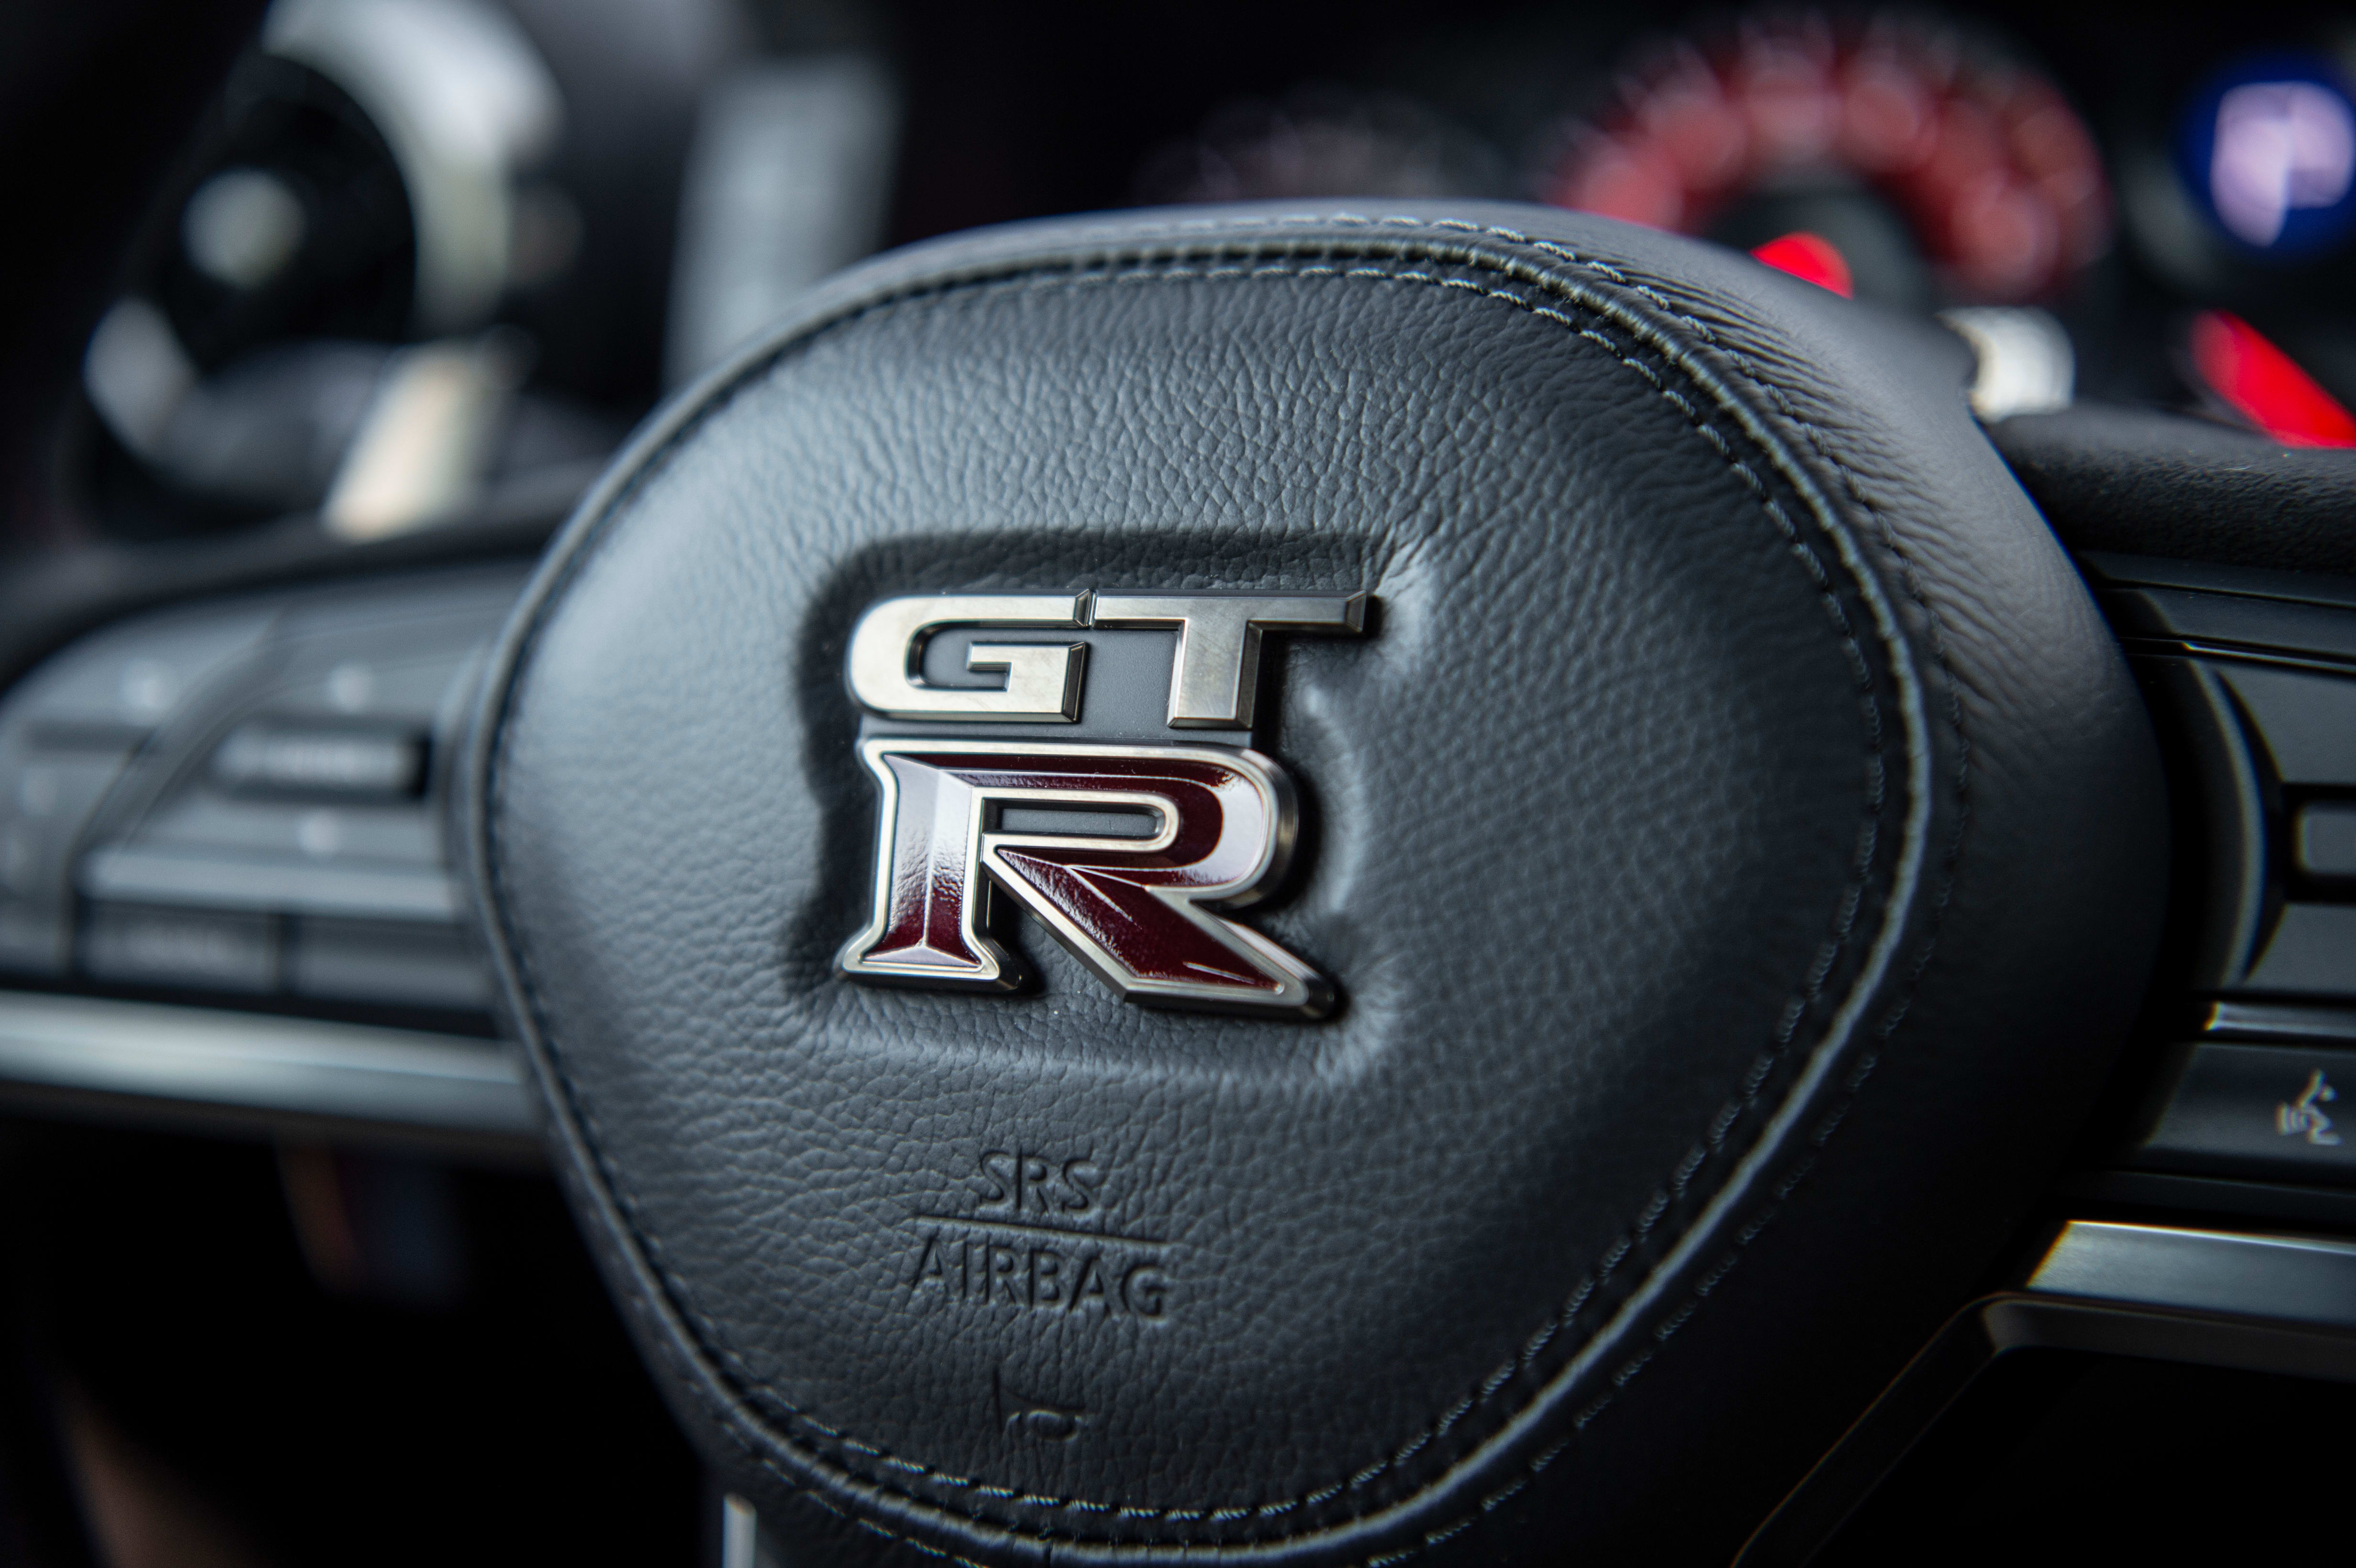 R36 Nissan GT-R Probably Won't Be A Hybrid